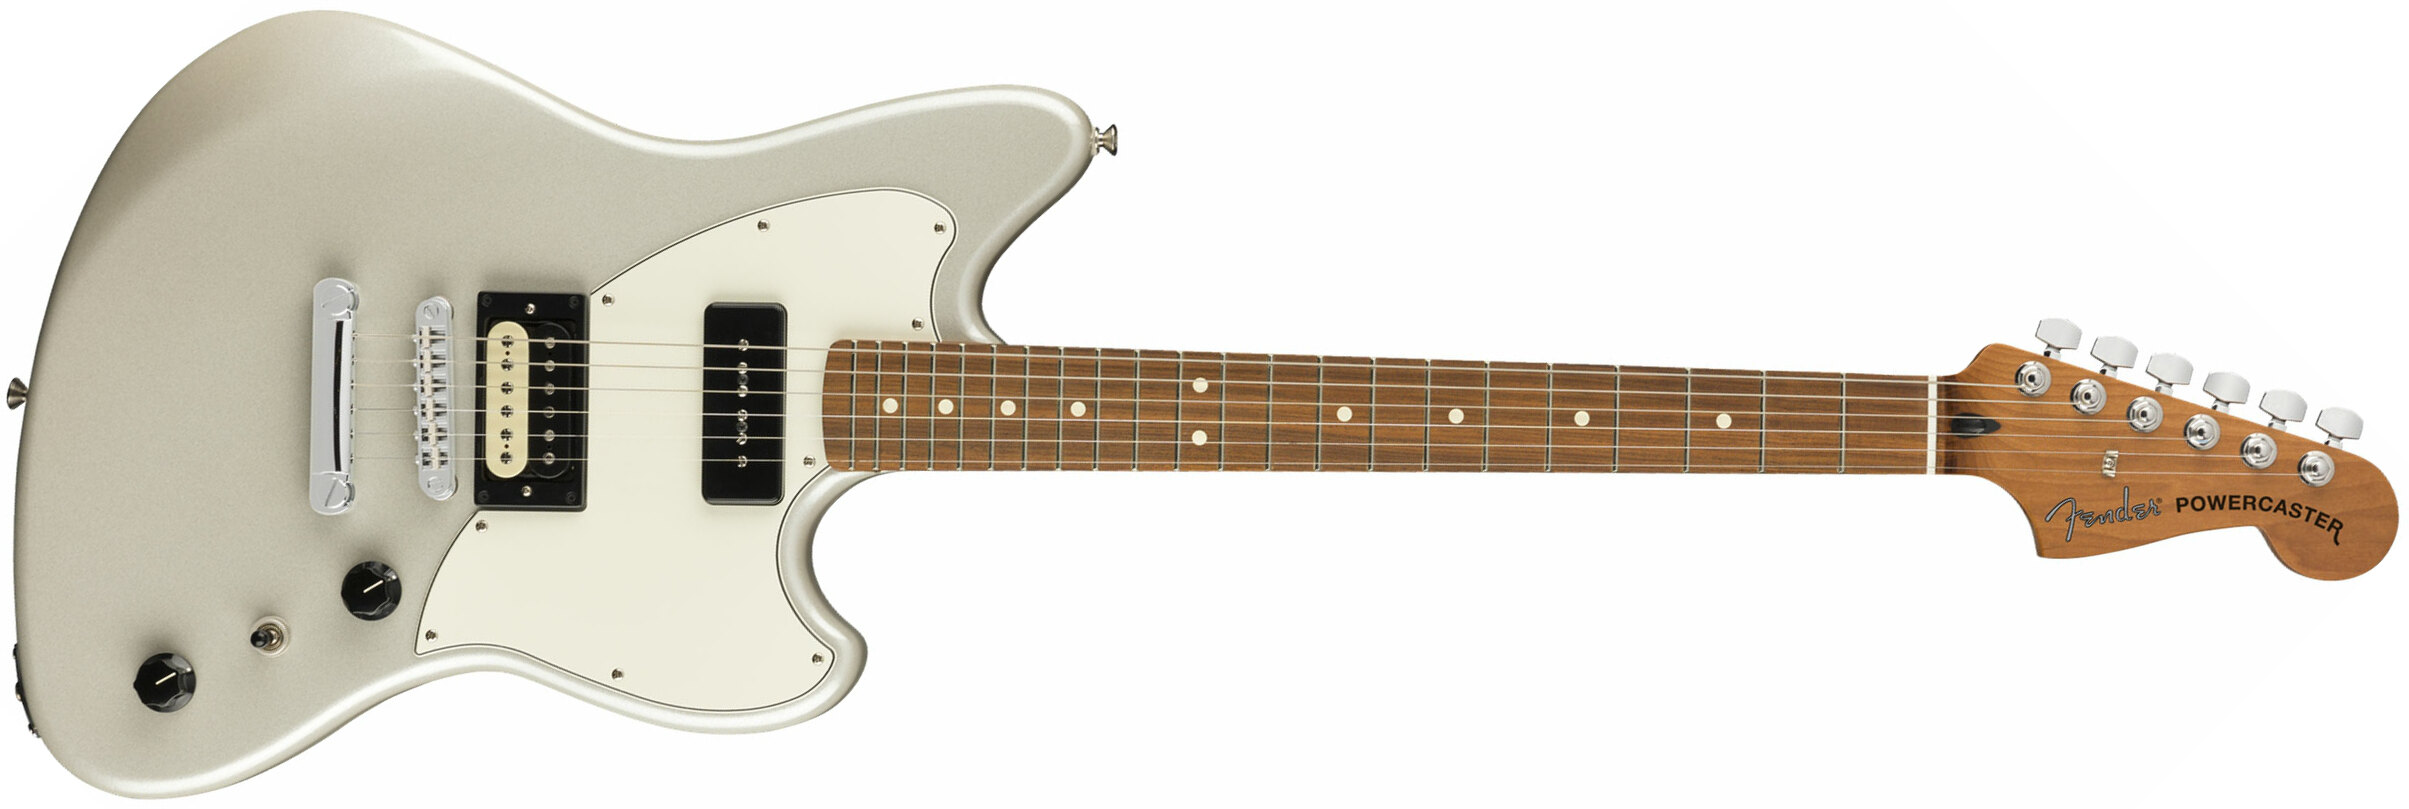 Fender Powercaster Alternate Reality Ltd Hp90 Ht Pf - White Opal - Guitarra electrica retro rock - Main picture